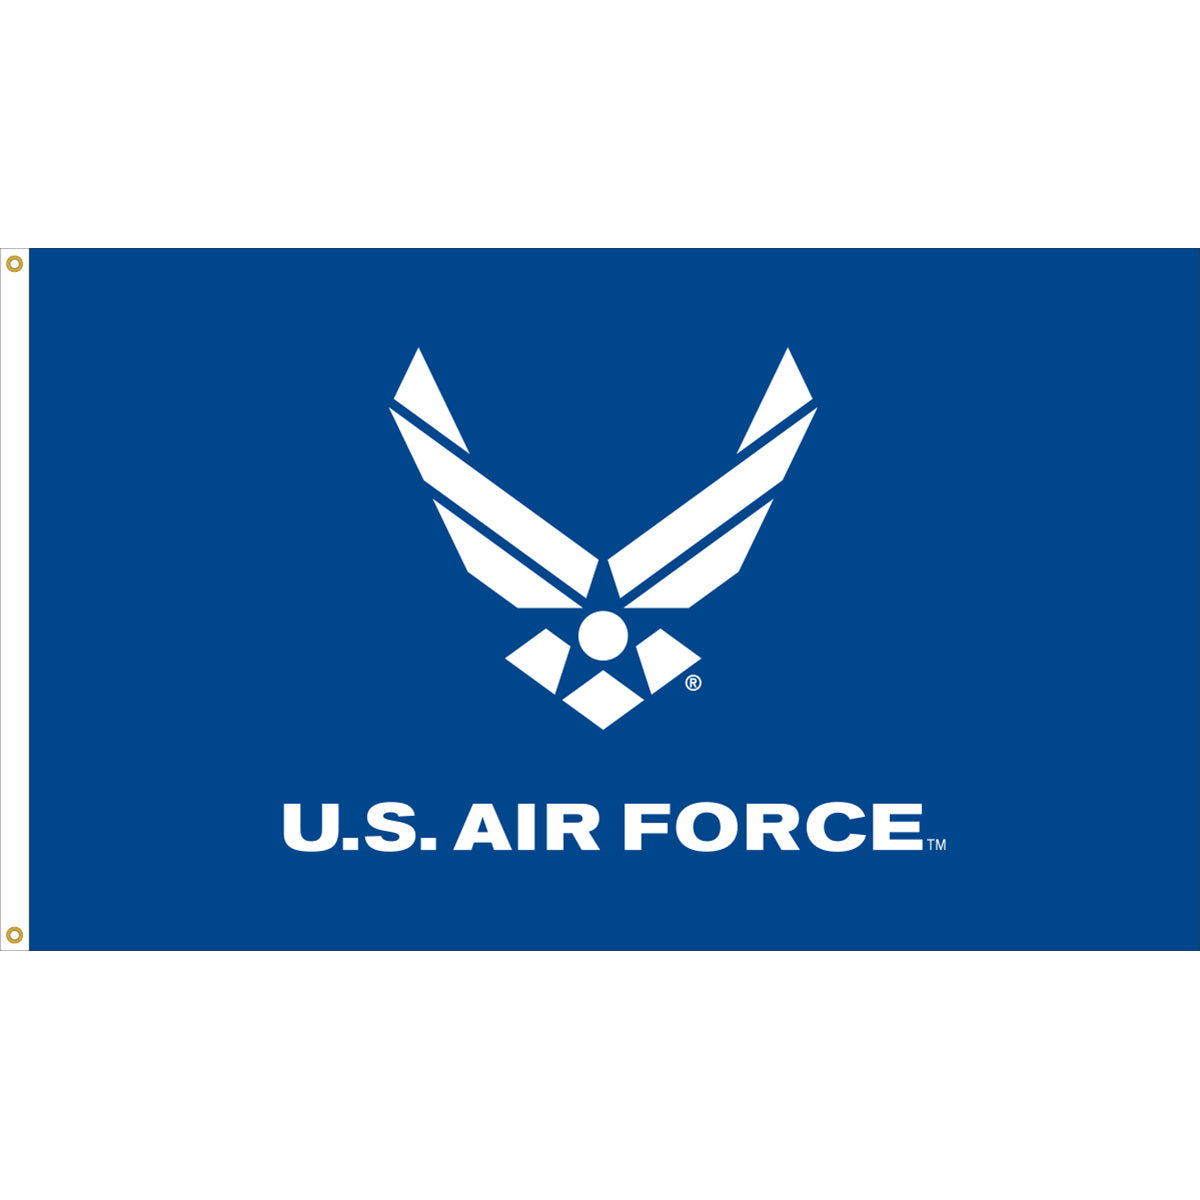 3'x5' Nylon Outdoor Air Force Logo Flag